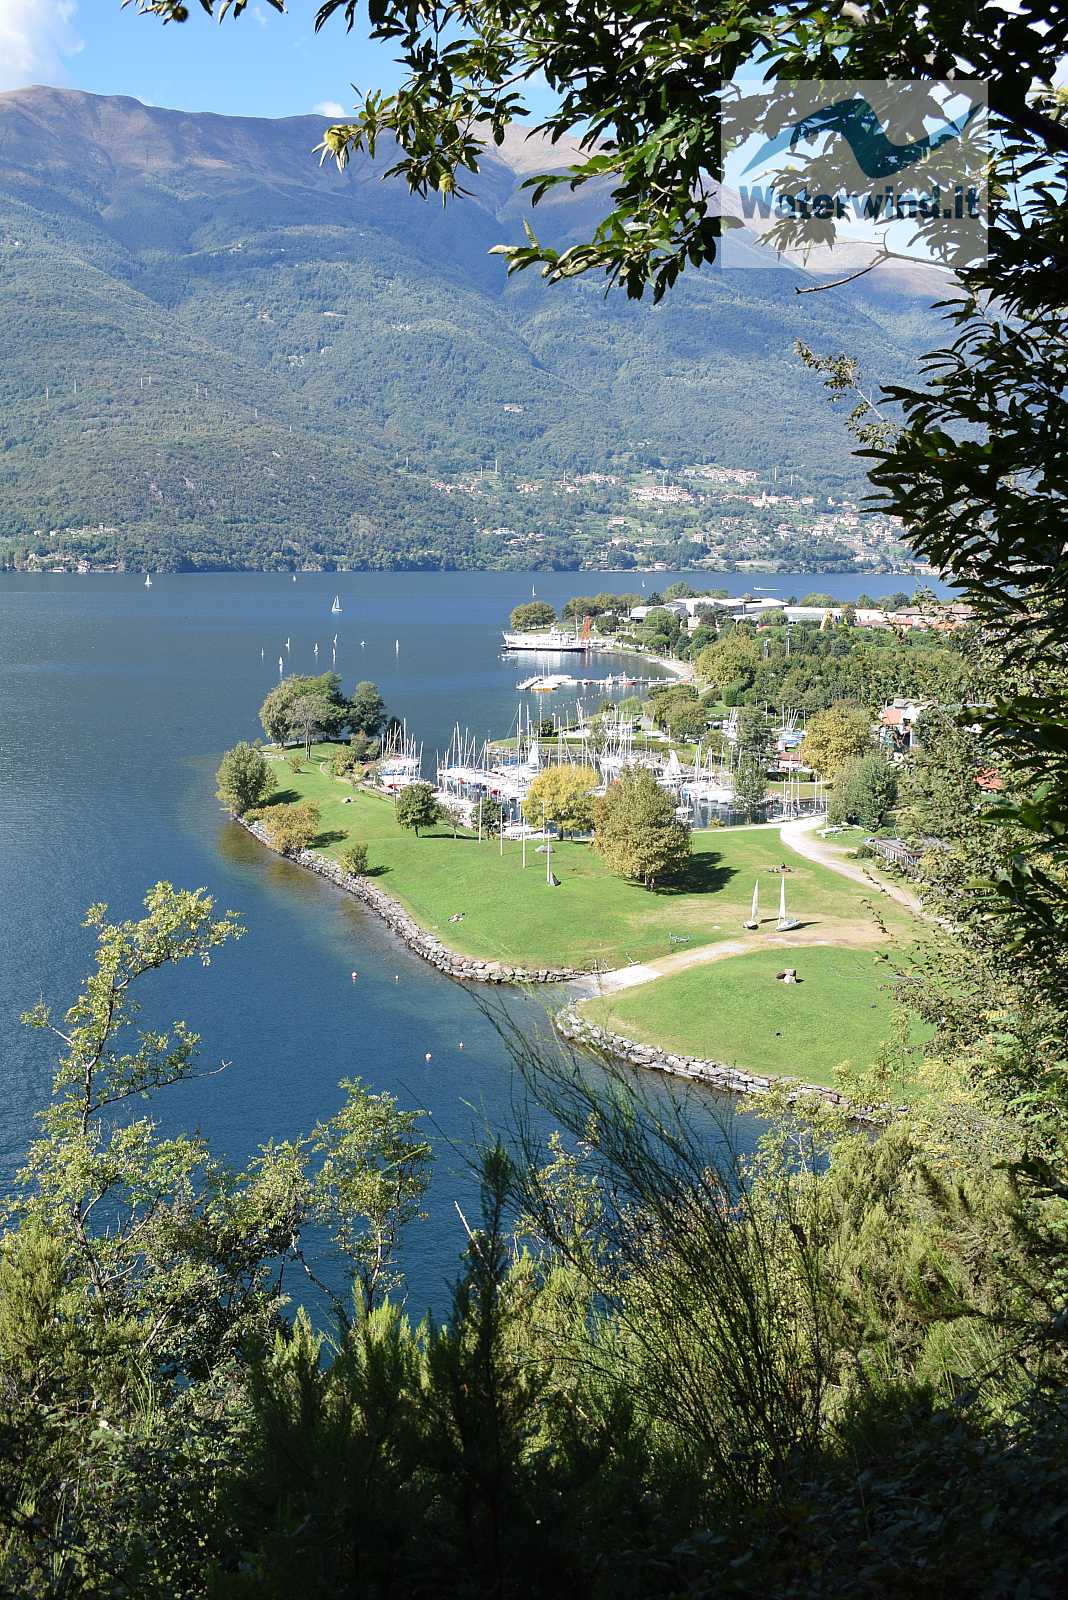 Viandante Track (Como Lake): Bellano - Dervio